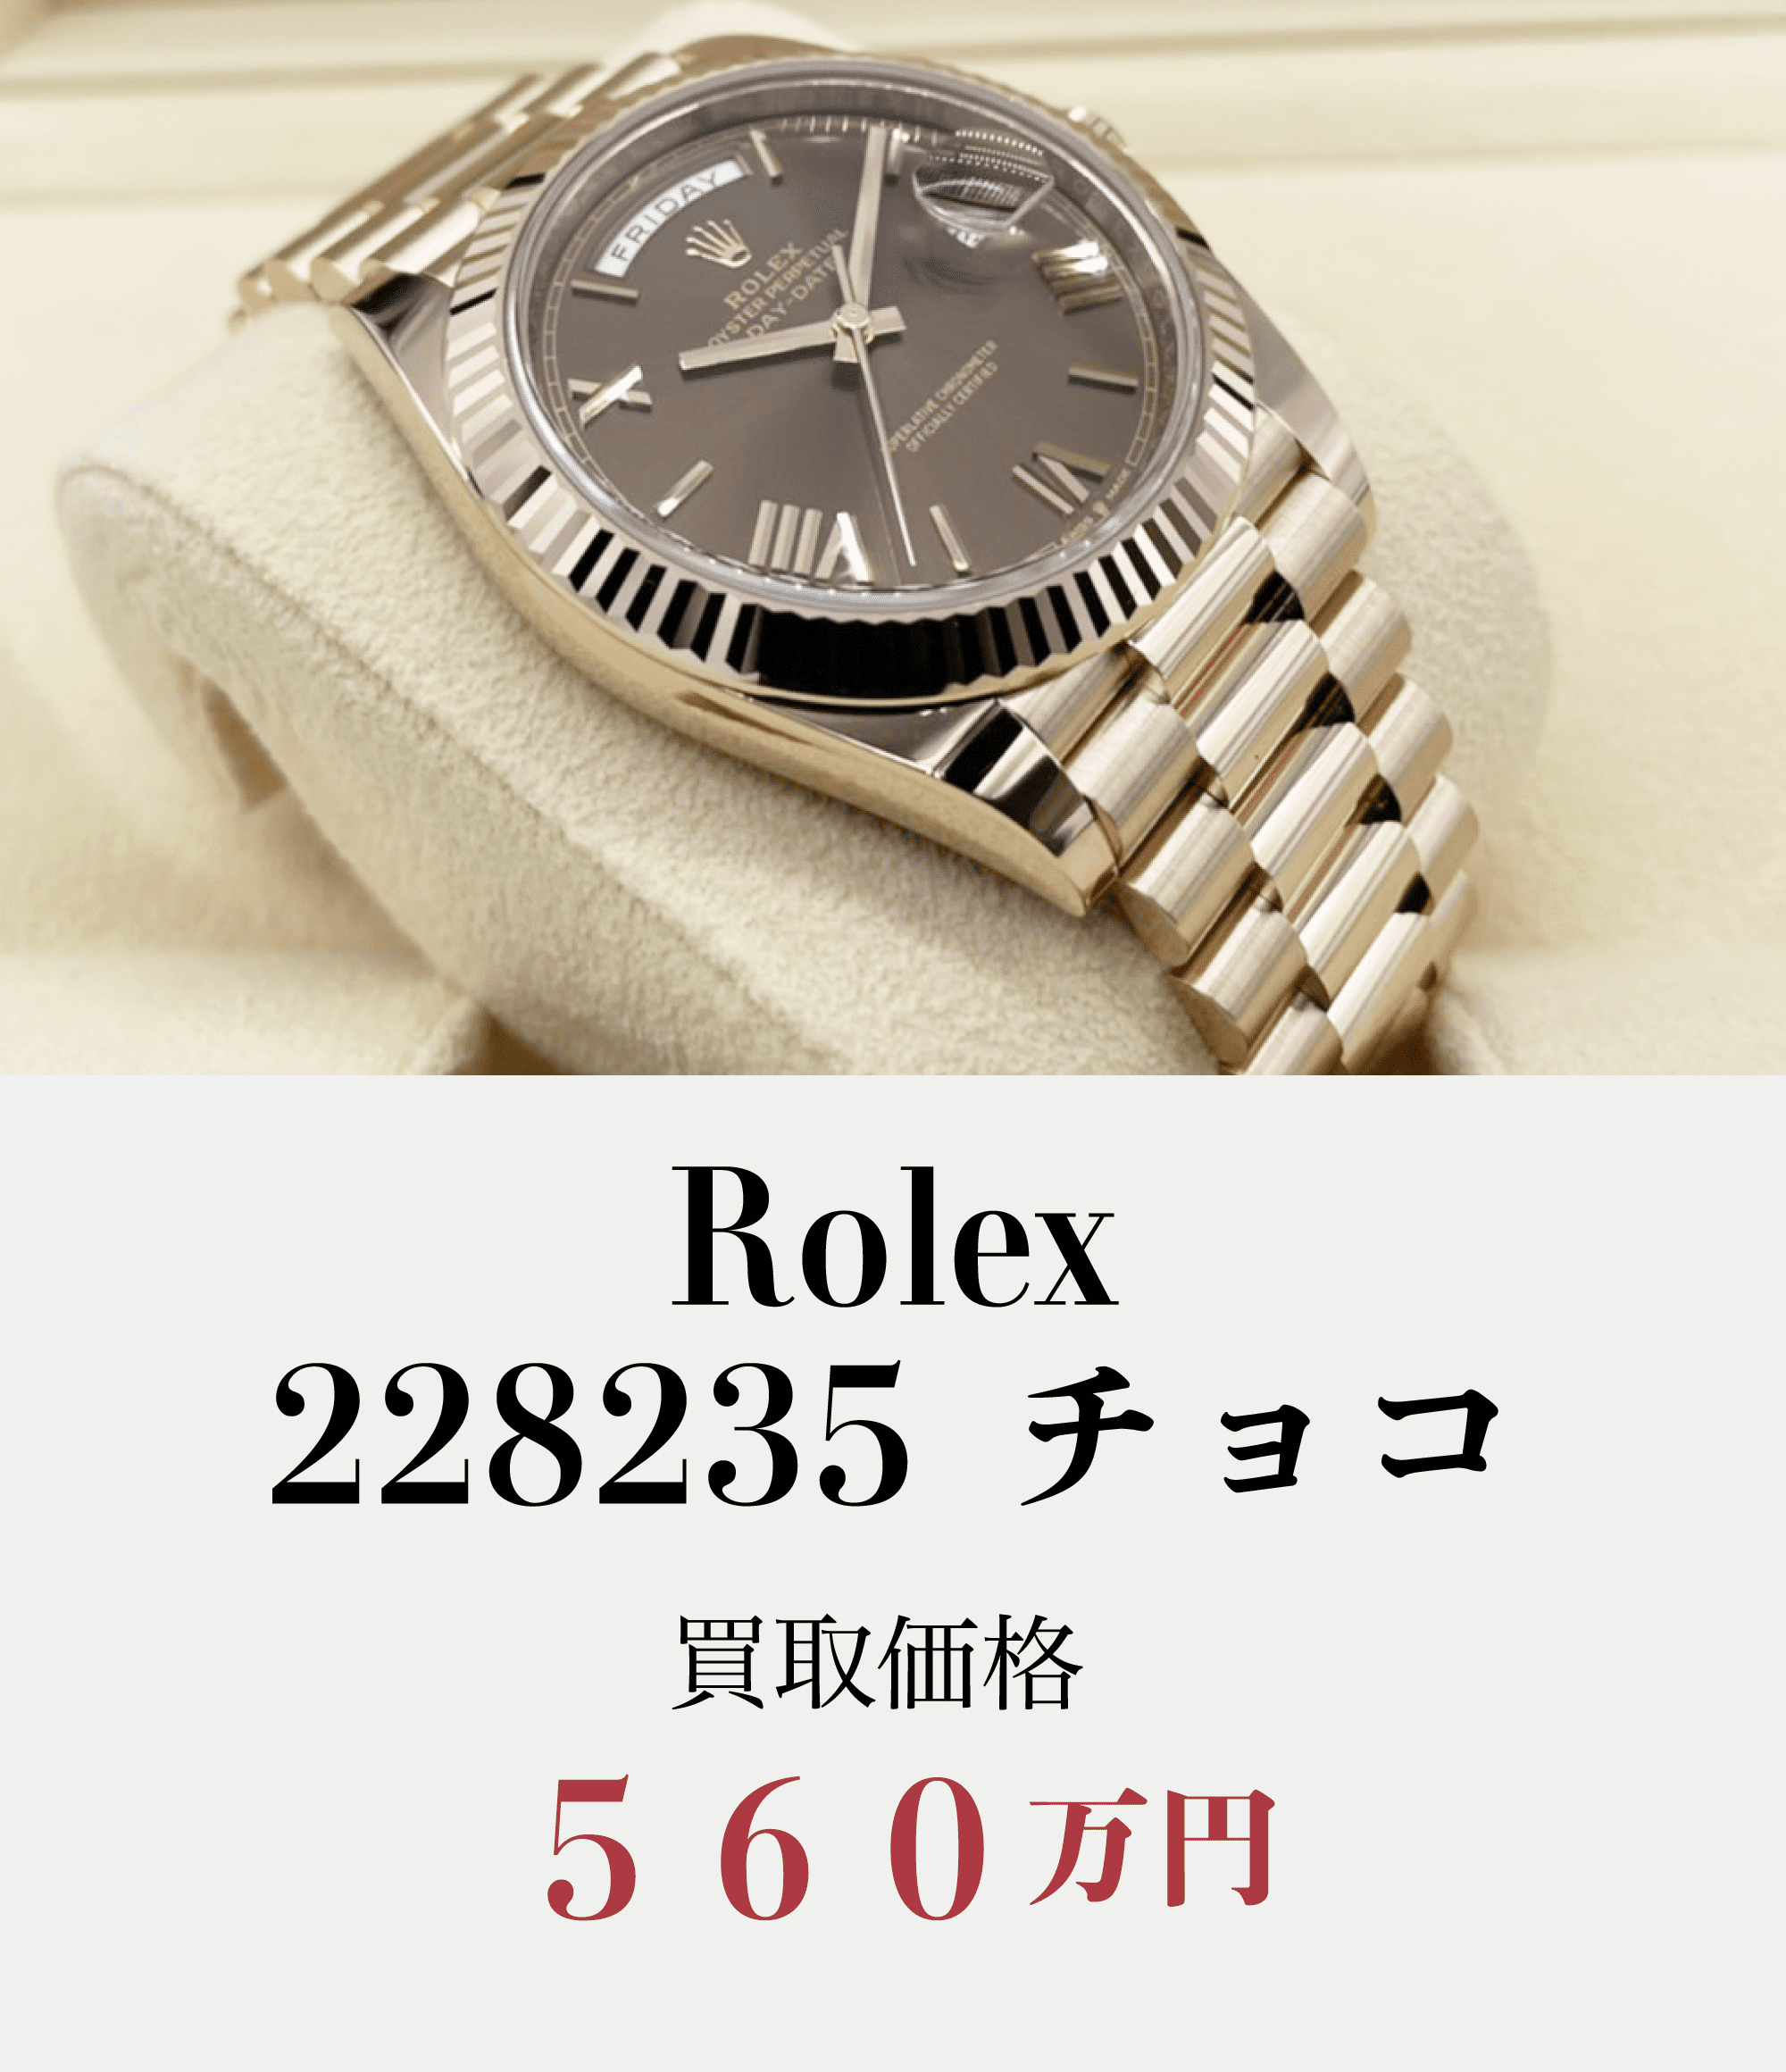 Rolex.228235チョコ買取価格560万円